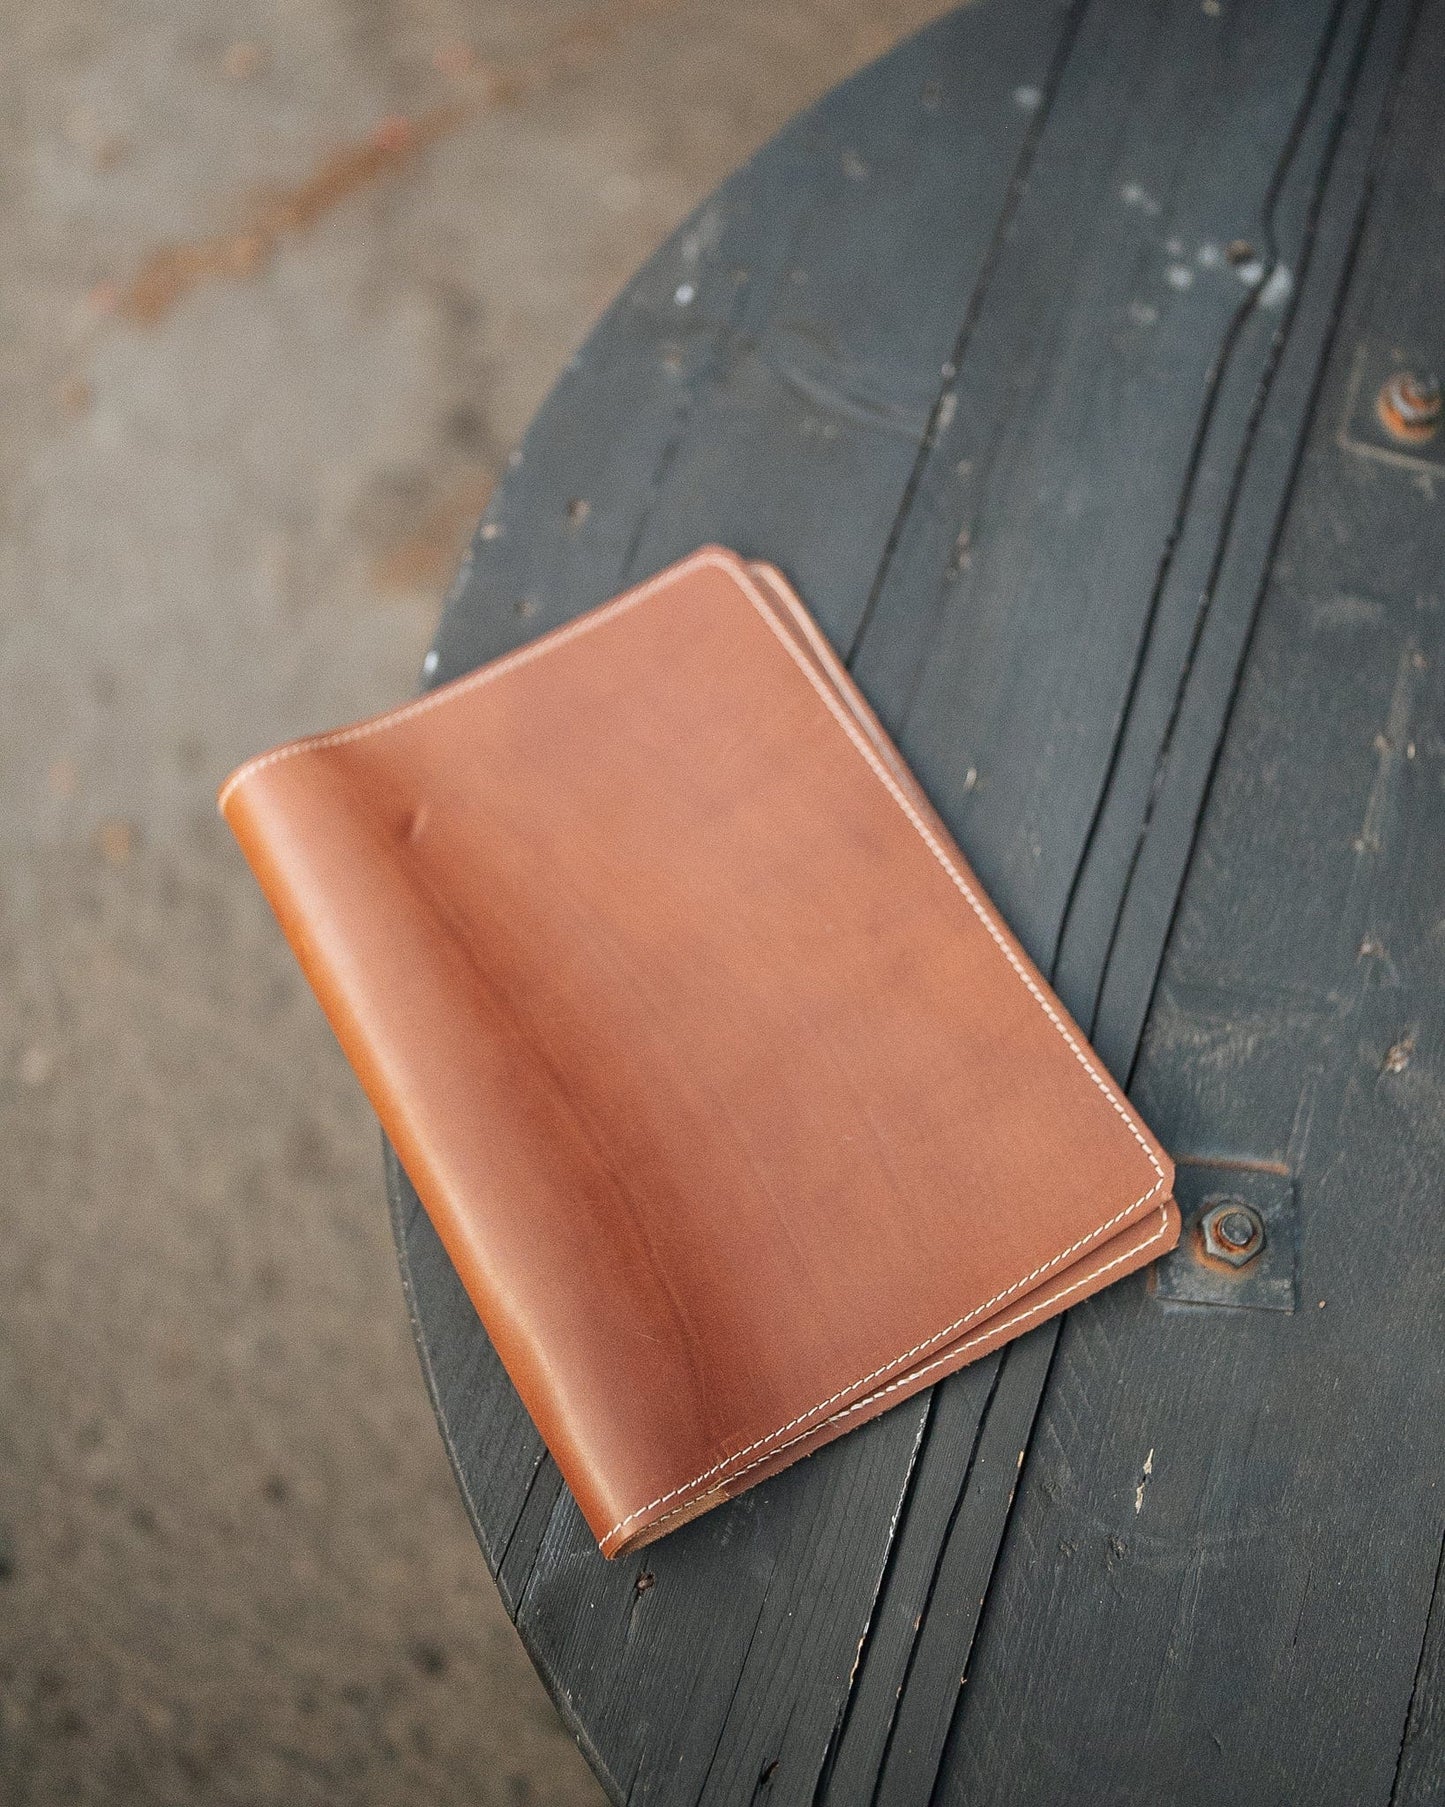 The Real McCaul Leathergoods Chestnut / Beige A4 Diary Journal Cover Australian Made Australian Owned Leather Rustic Book/Diary Cover Australian Made